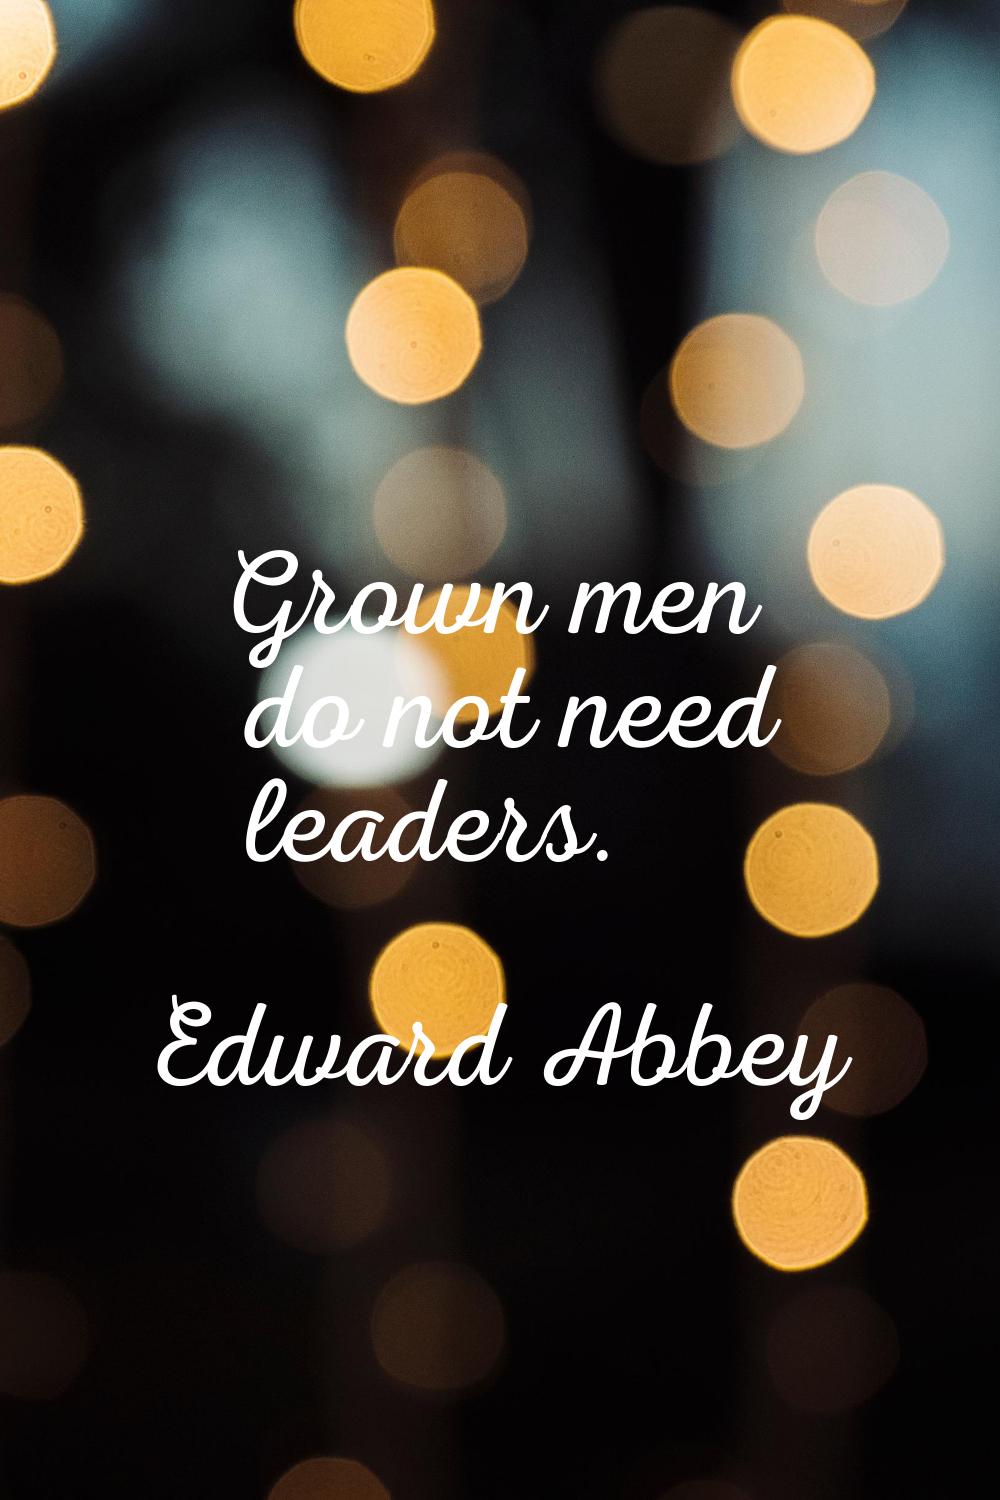 Grown men do not need leaders.